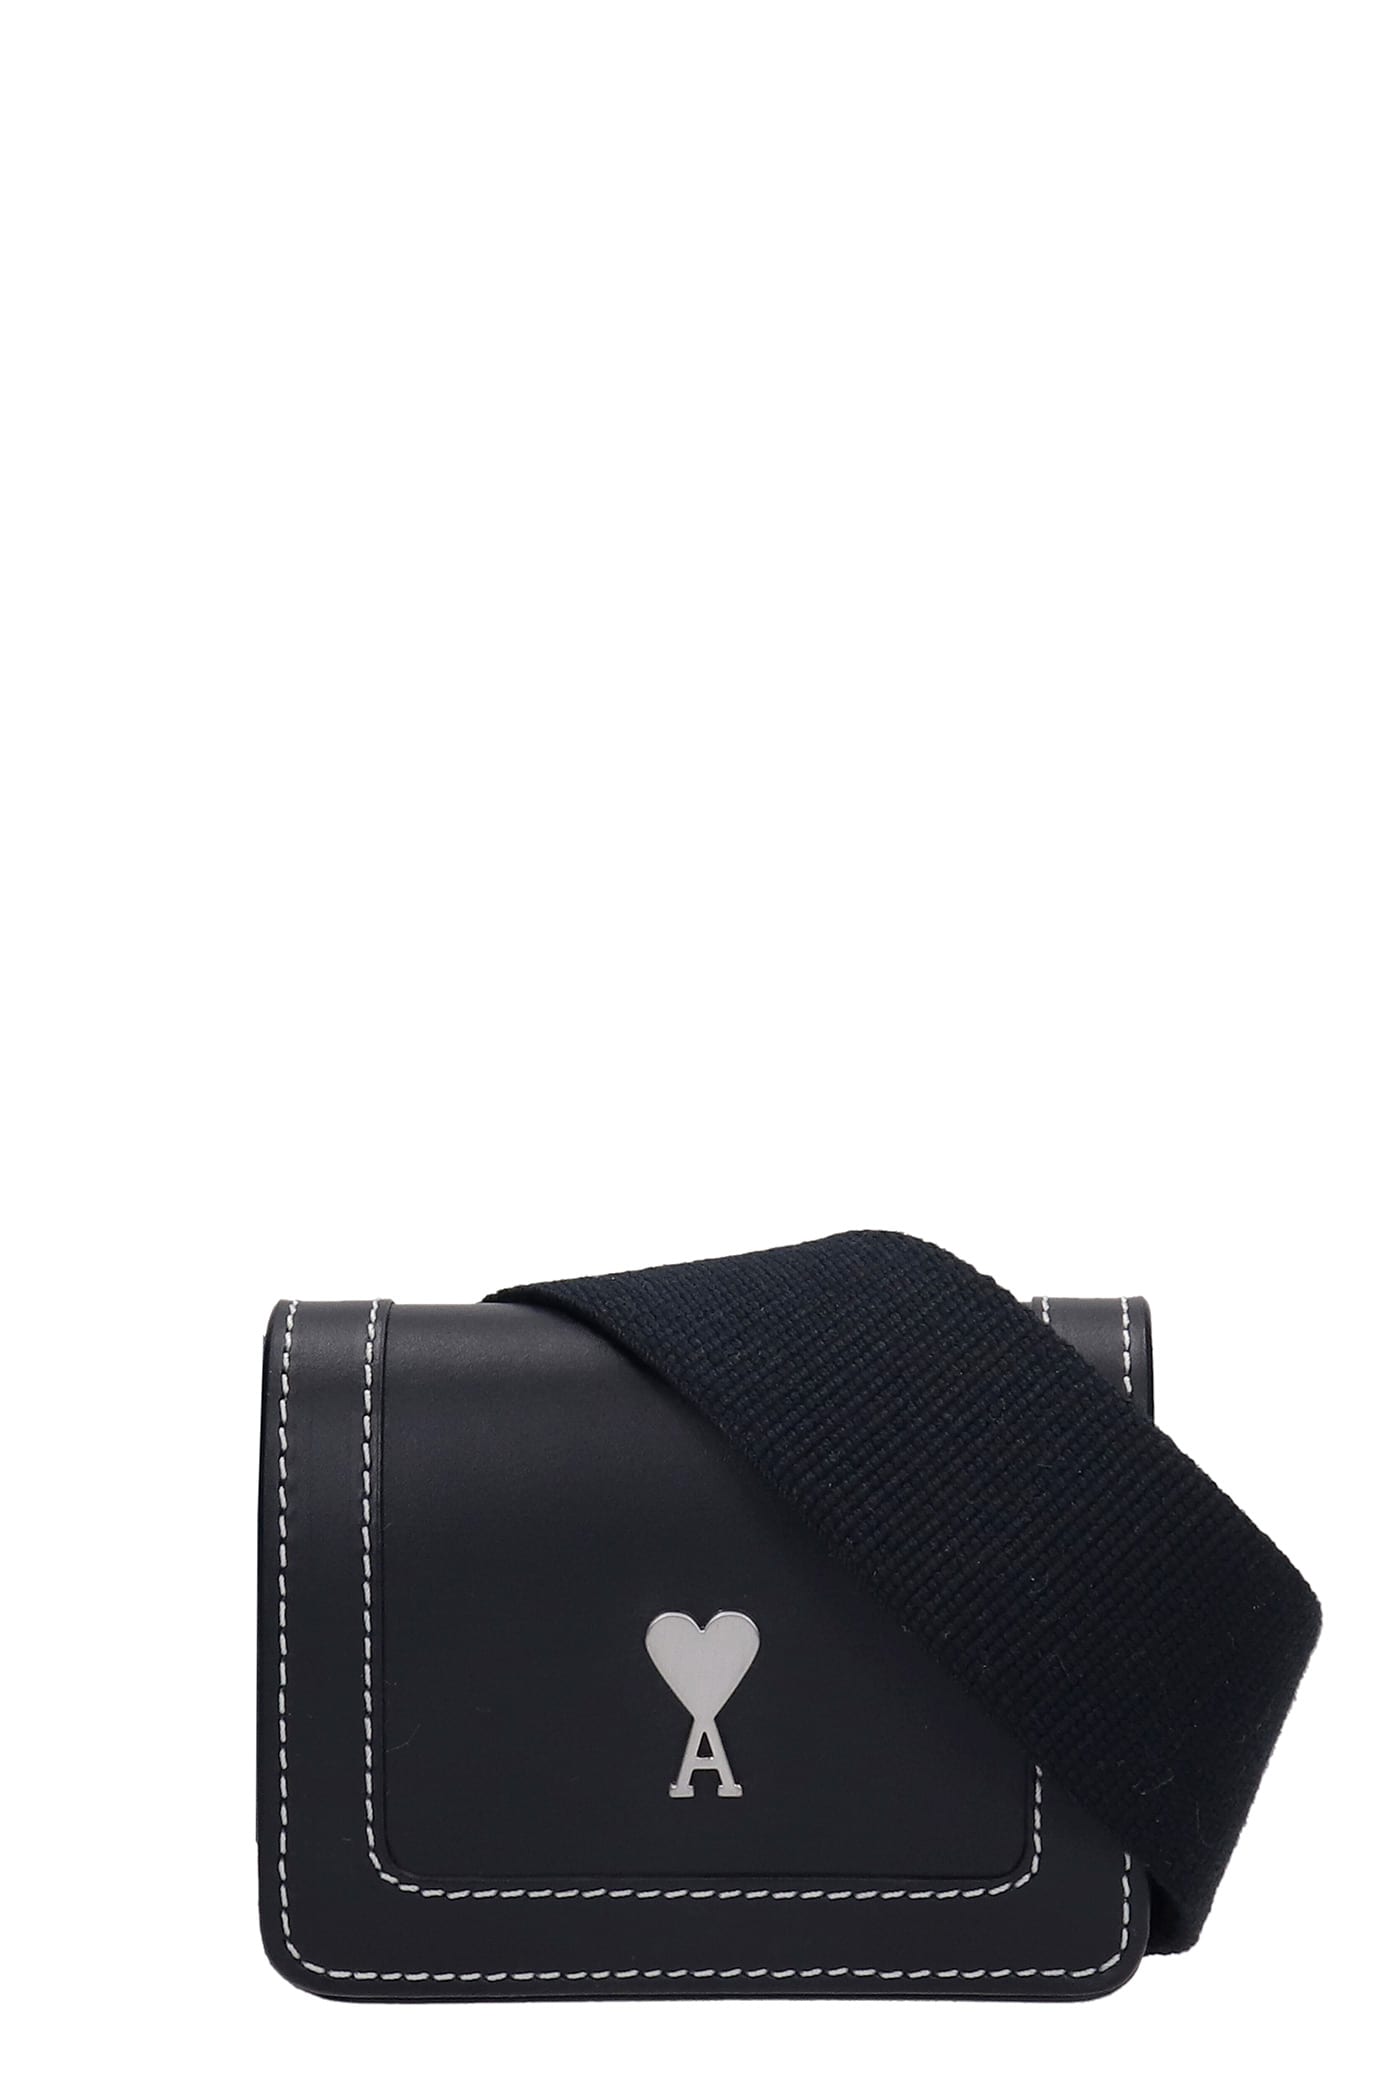 Ami Alexandre Mattiussi Wallet In Black Leather